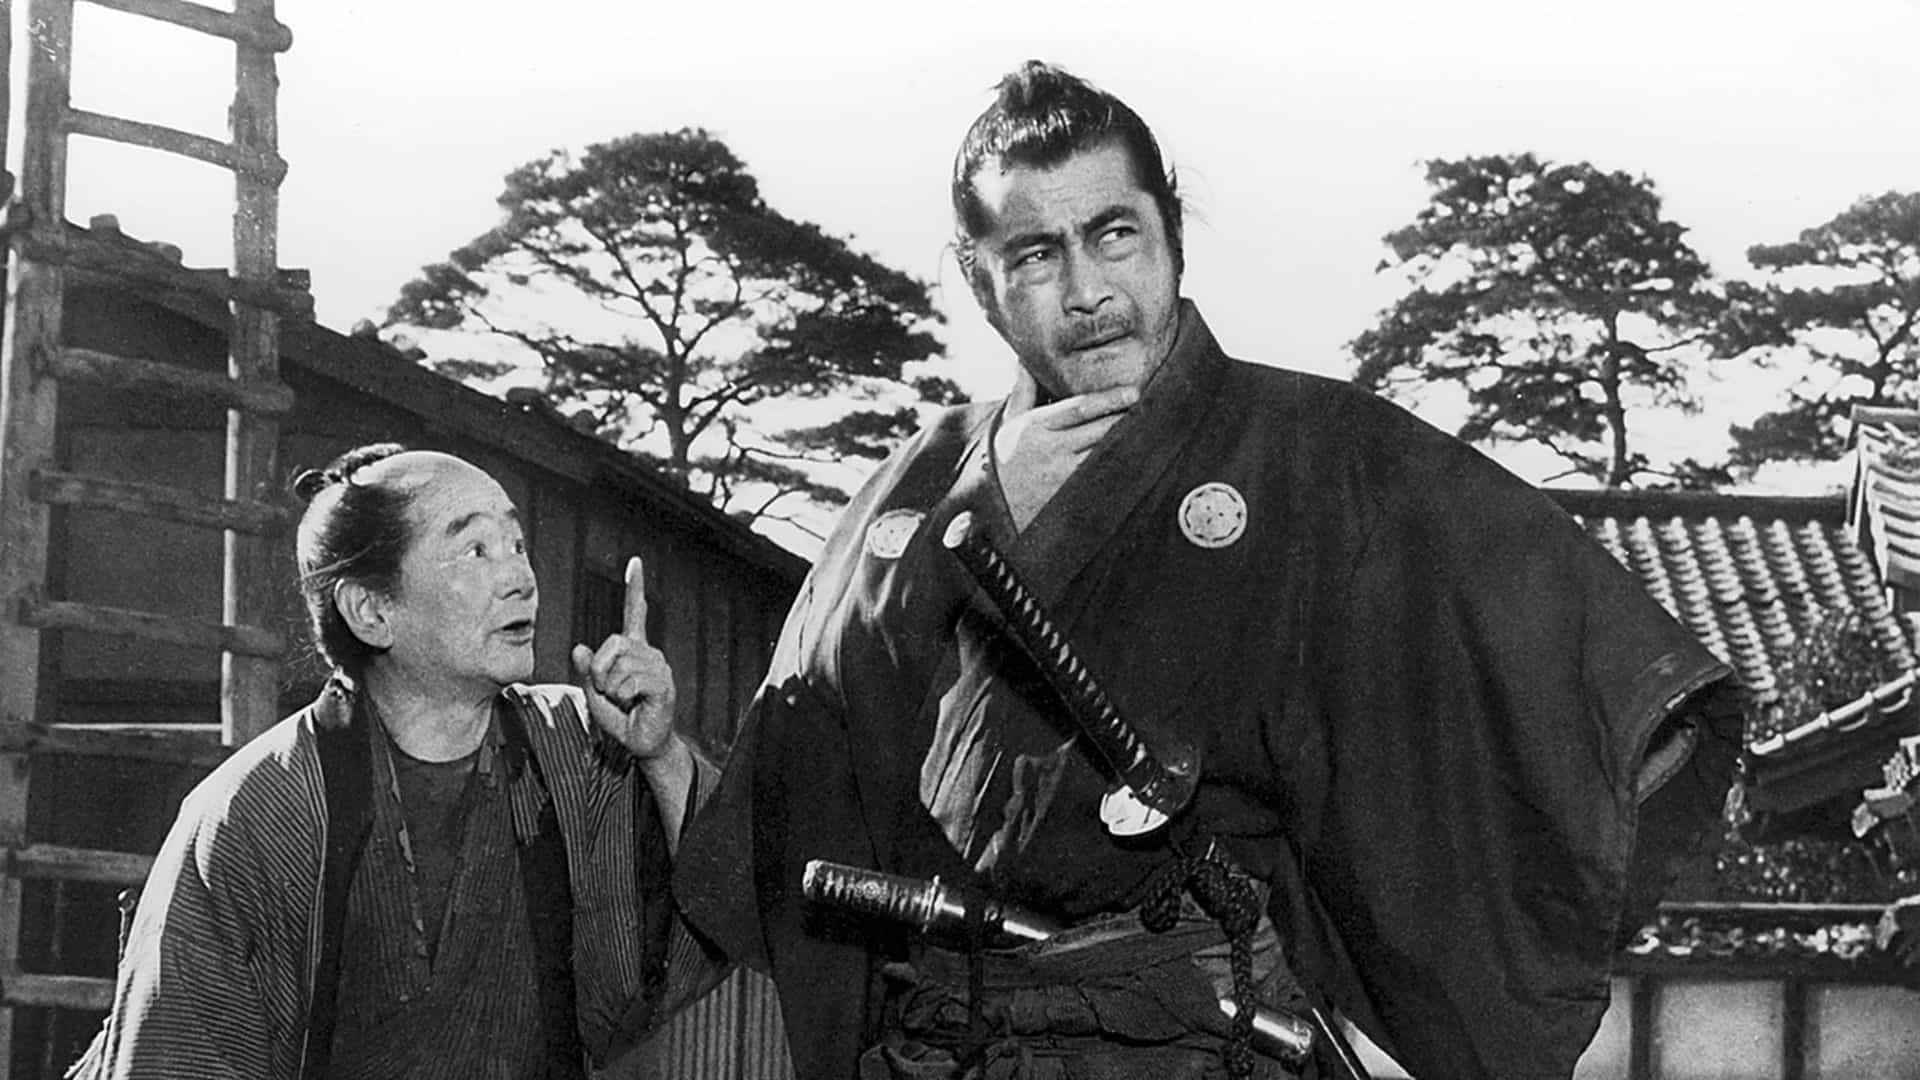 Yojimbo film review, Leibwchter filmkritik, Akira Kurosawa's work, Samurai cinema, 1920x1080 Full HD Desktop